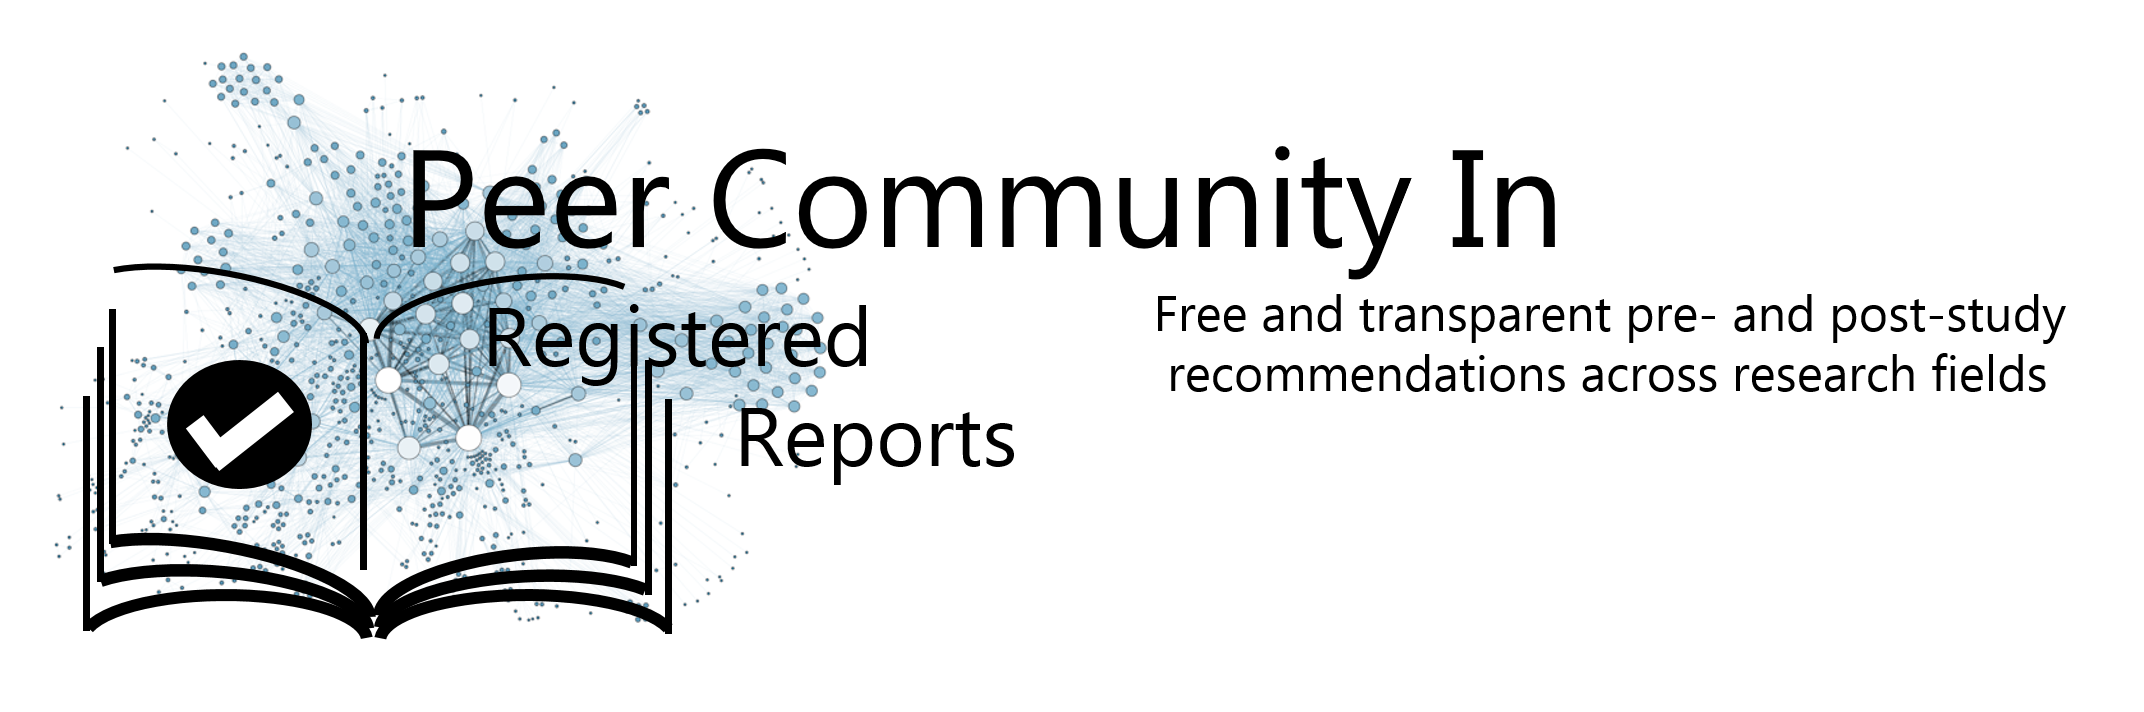 Peer Community in Registered Reports logo